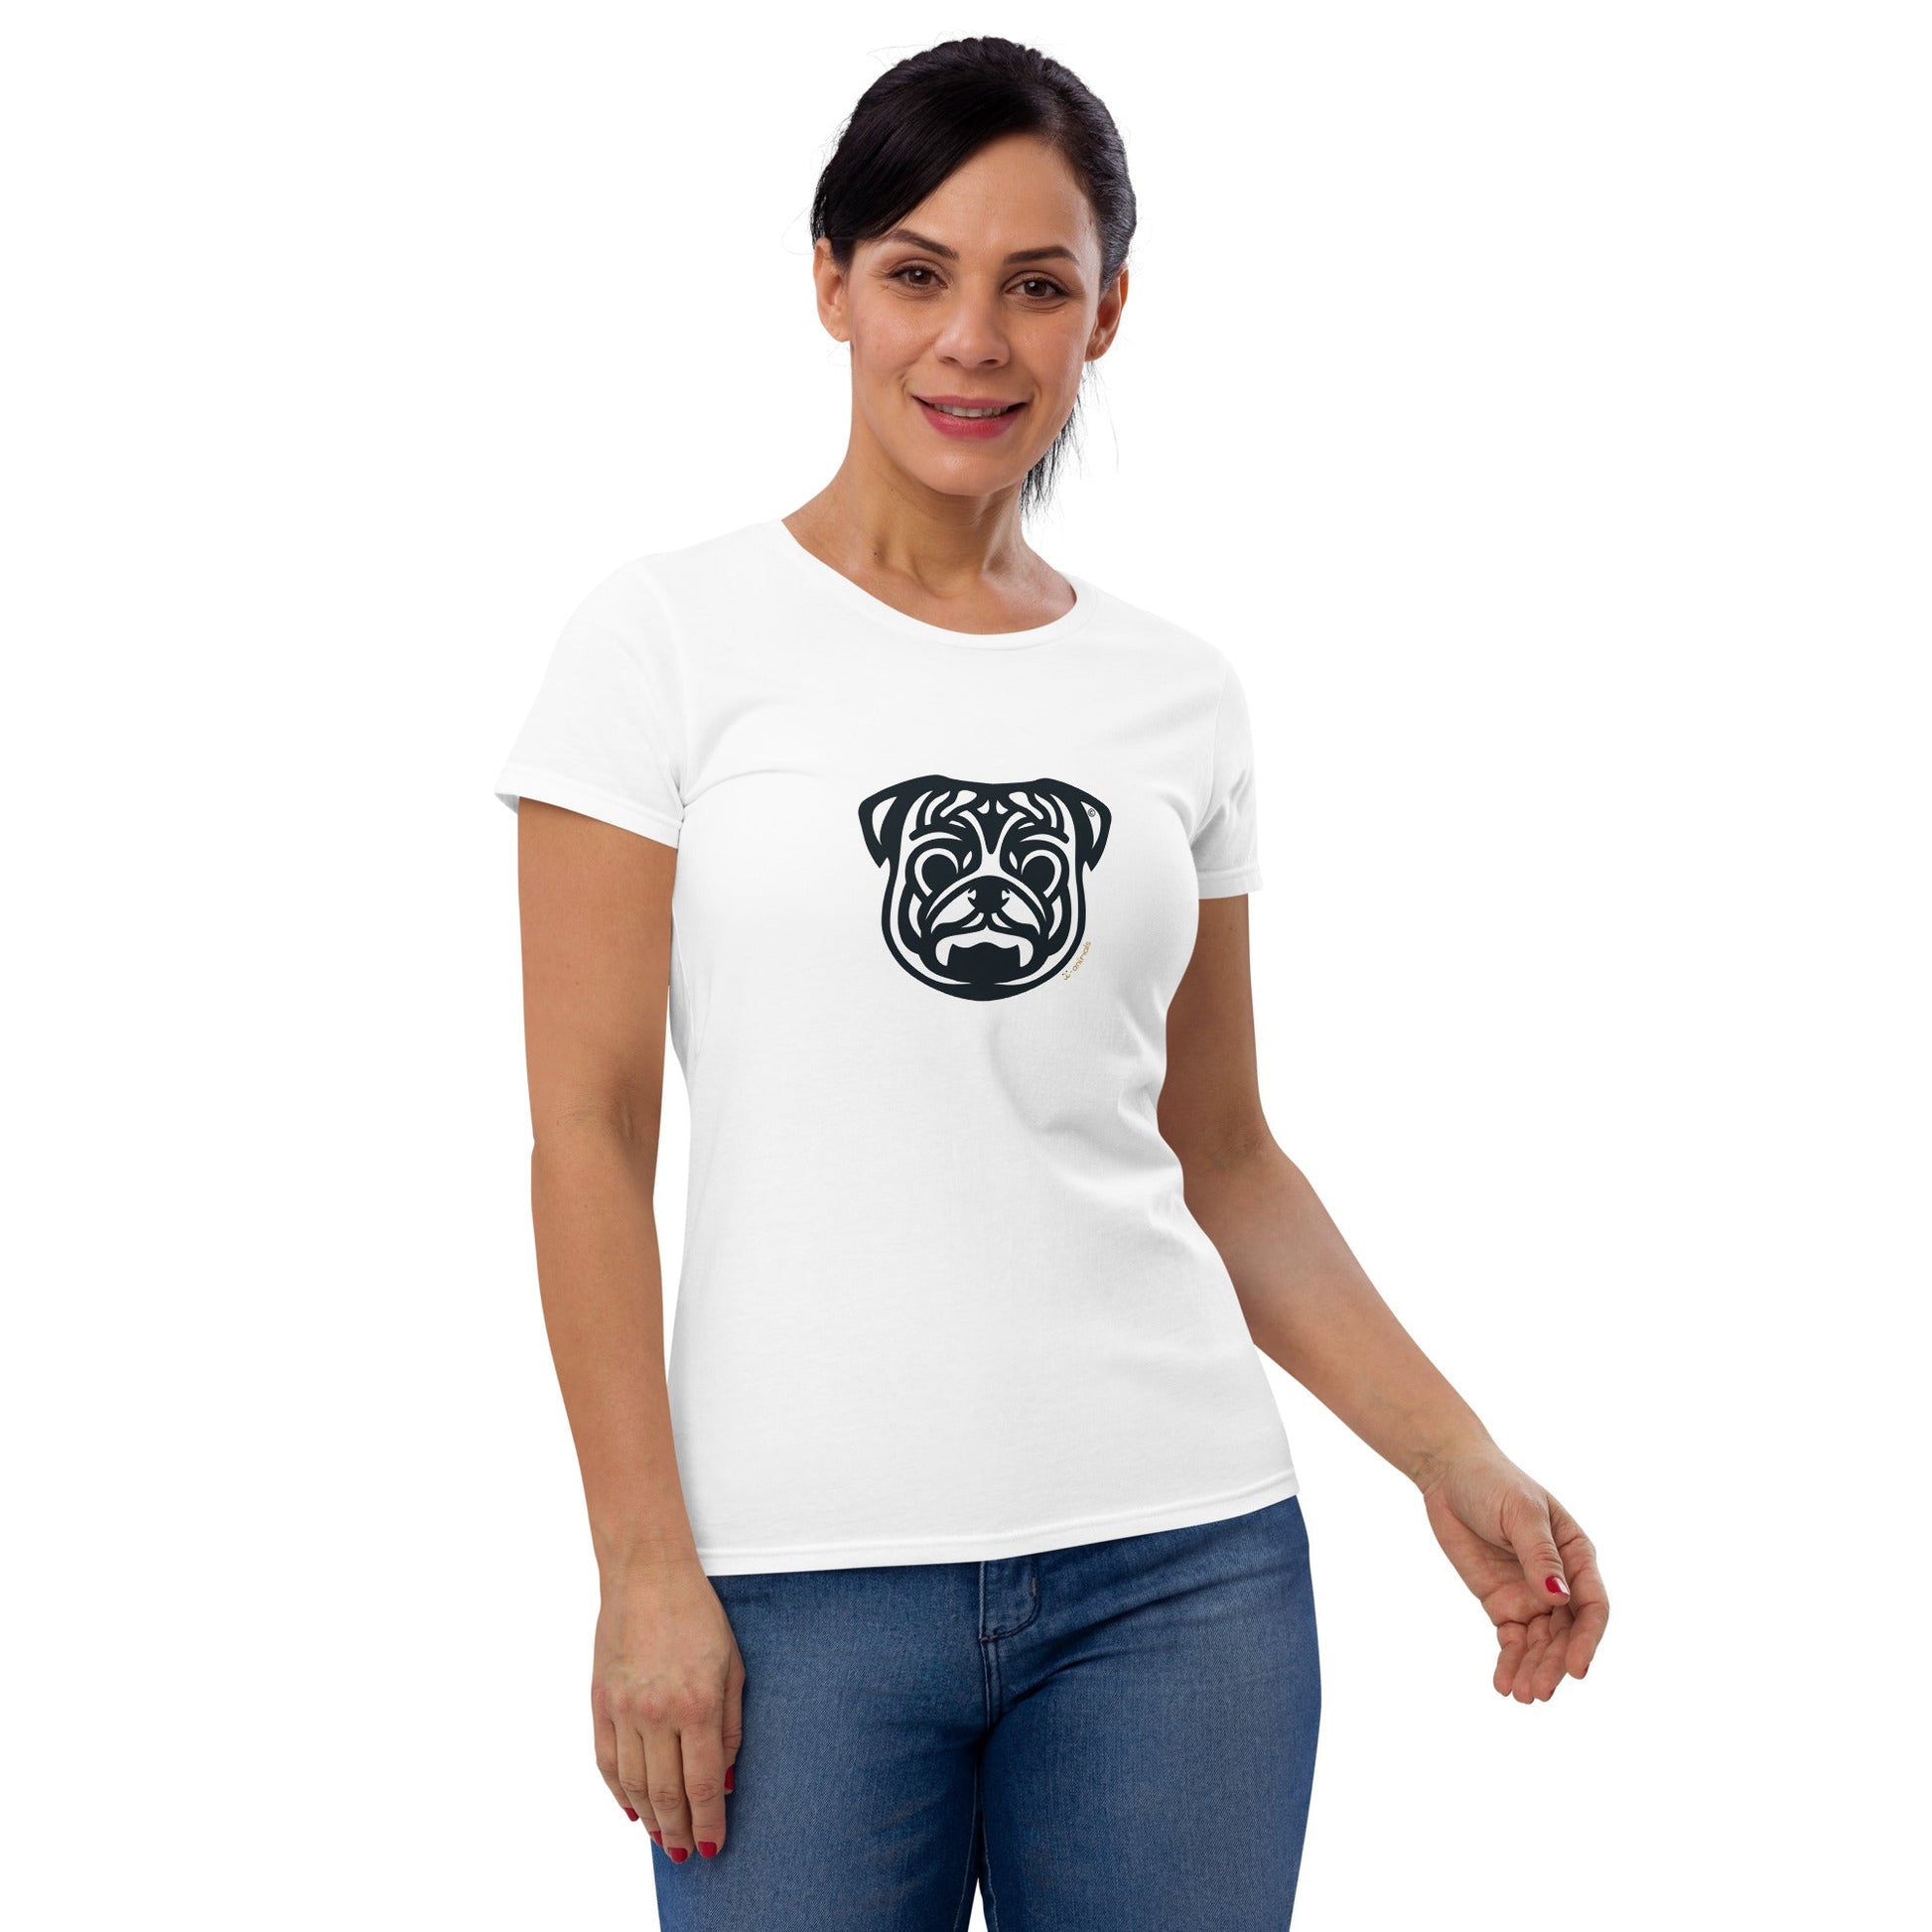 Camiseta feminina de manga curta - Pug - Cores Claras i-animals